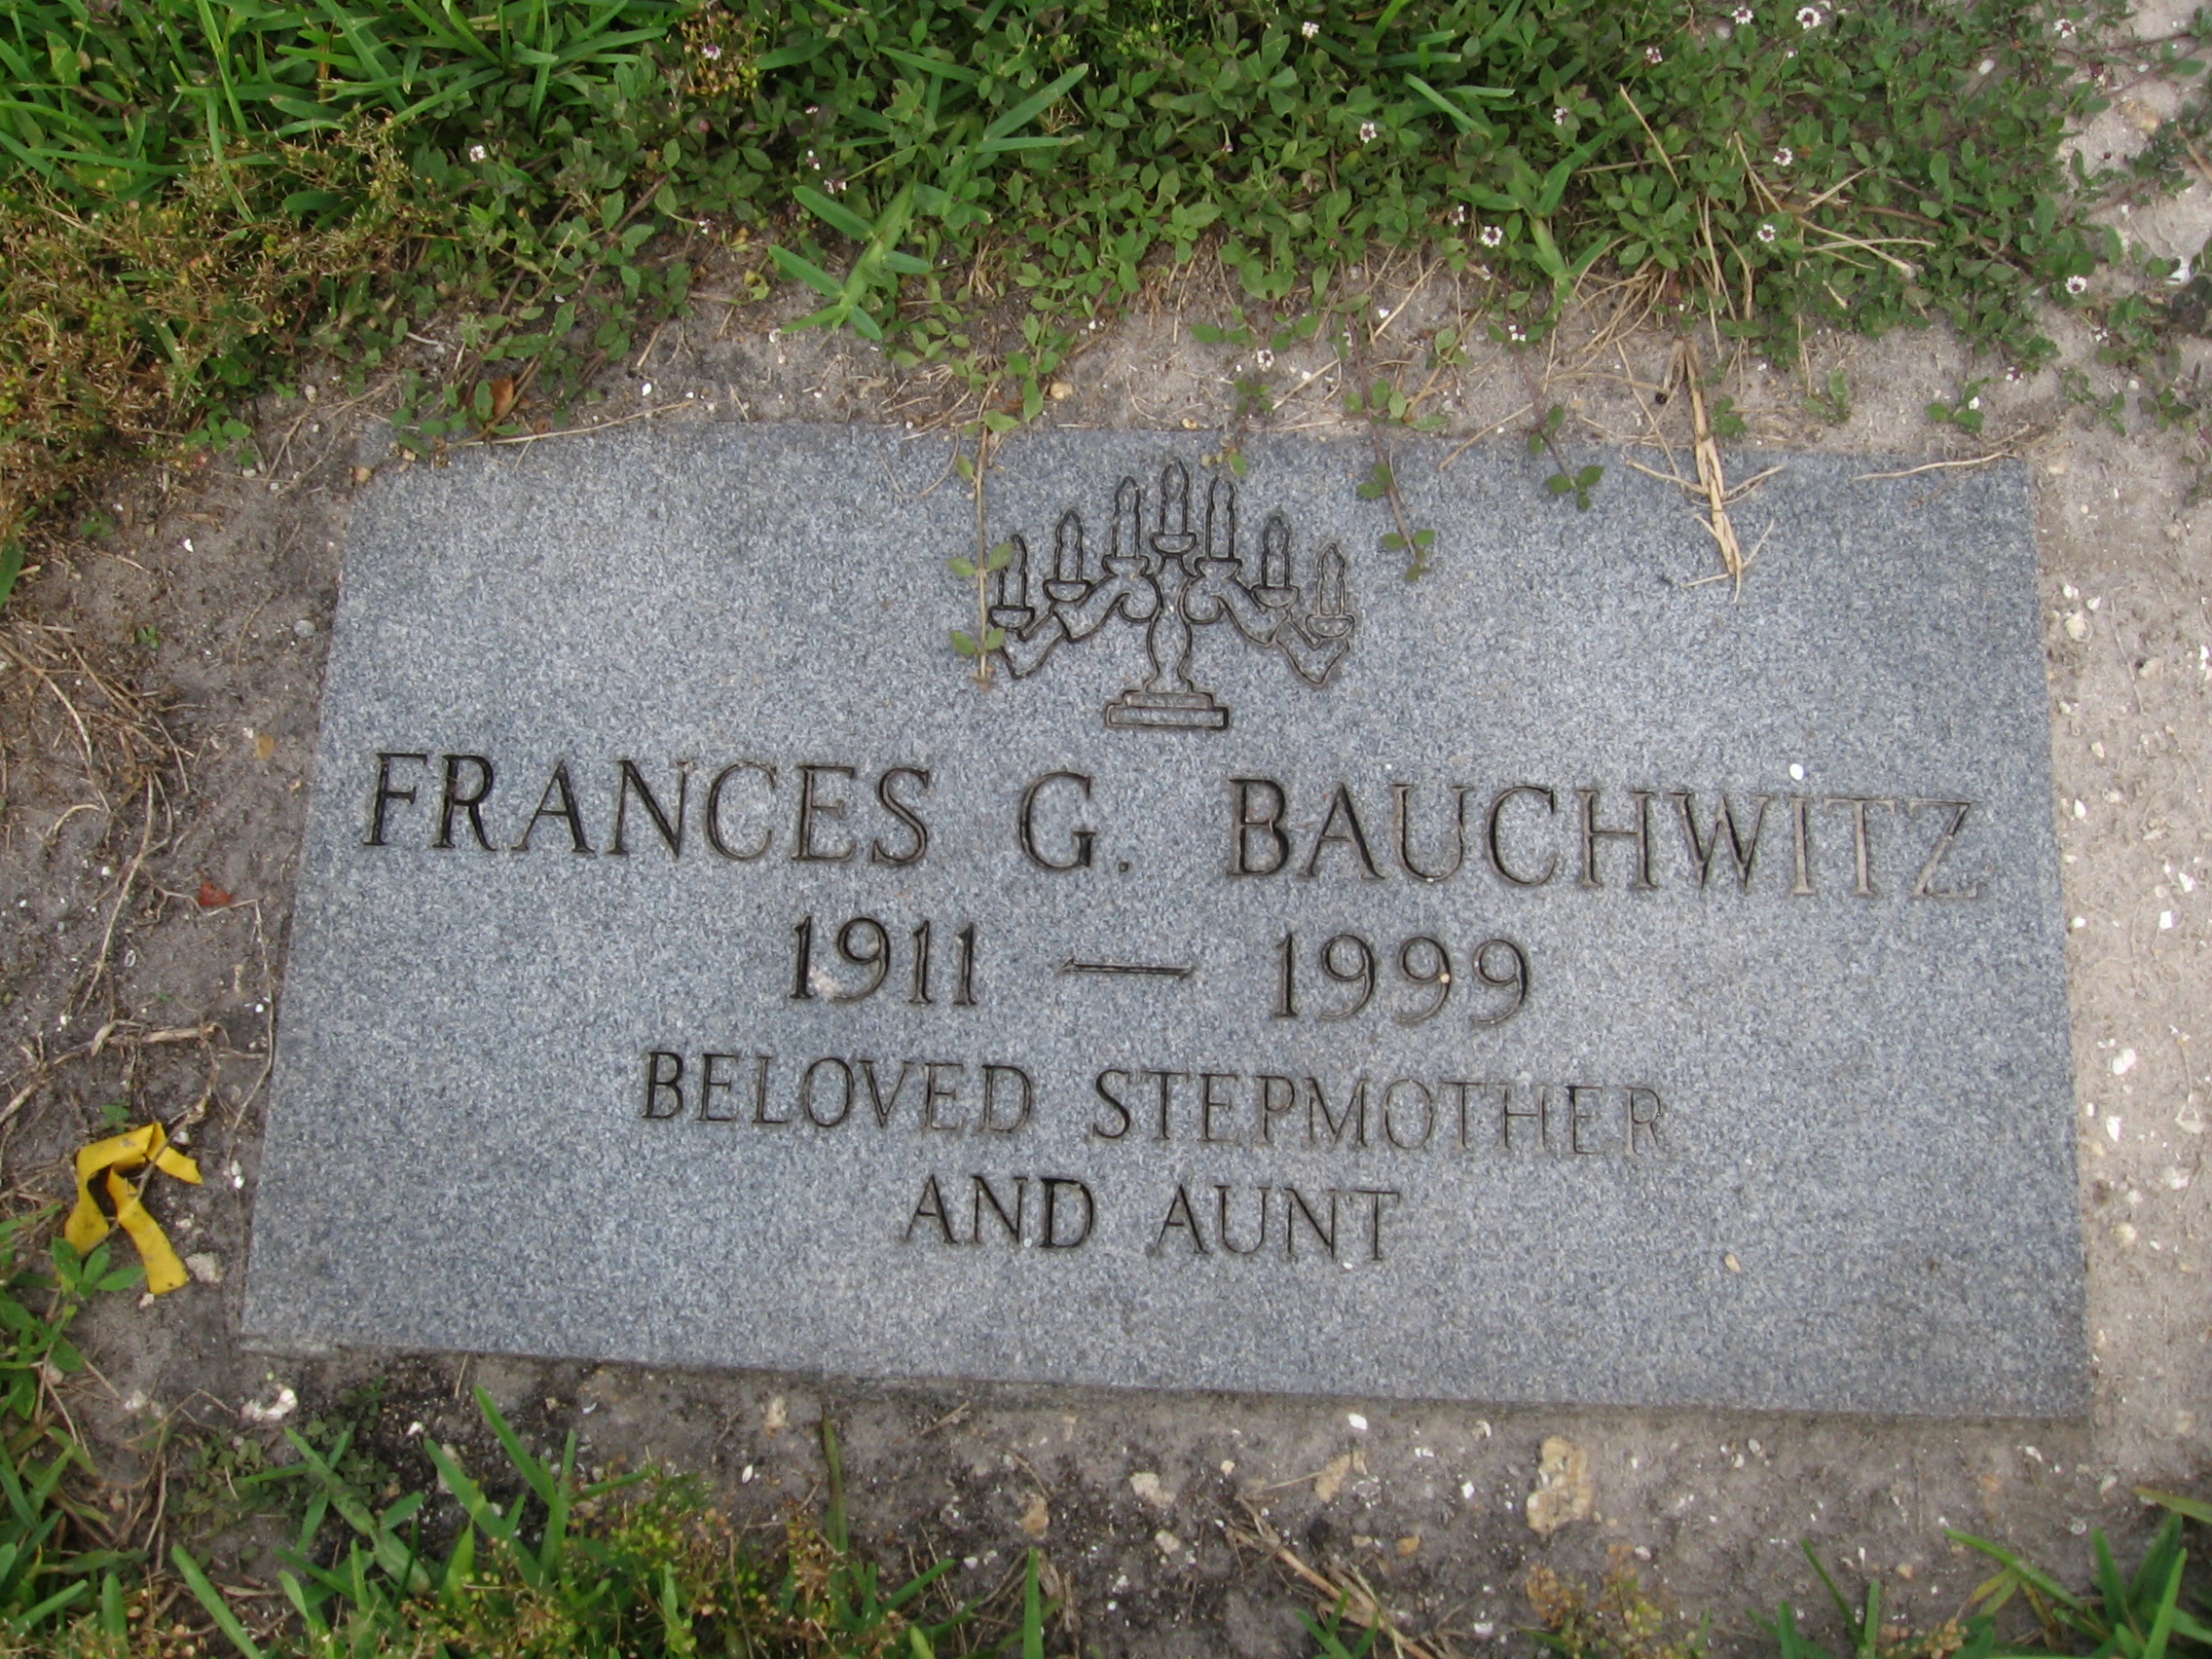 Frances G Bauchwitz